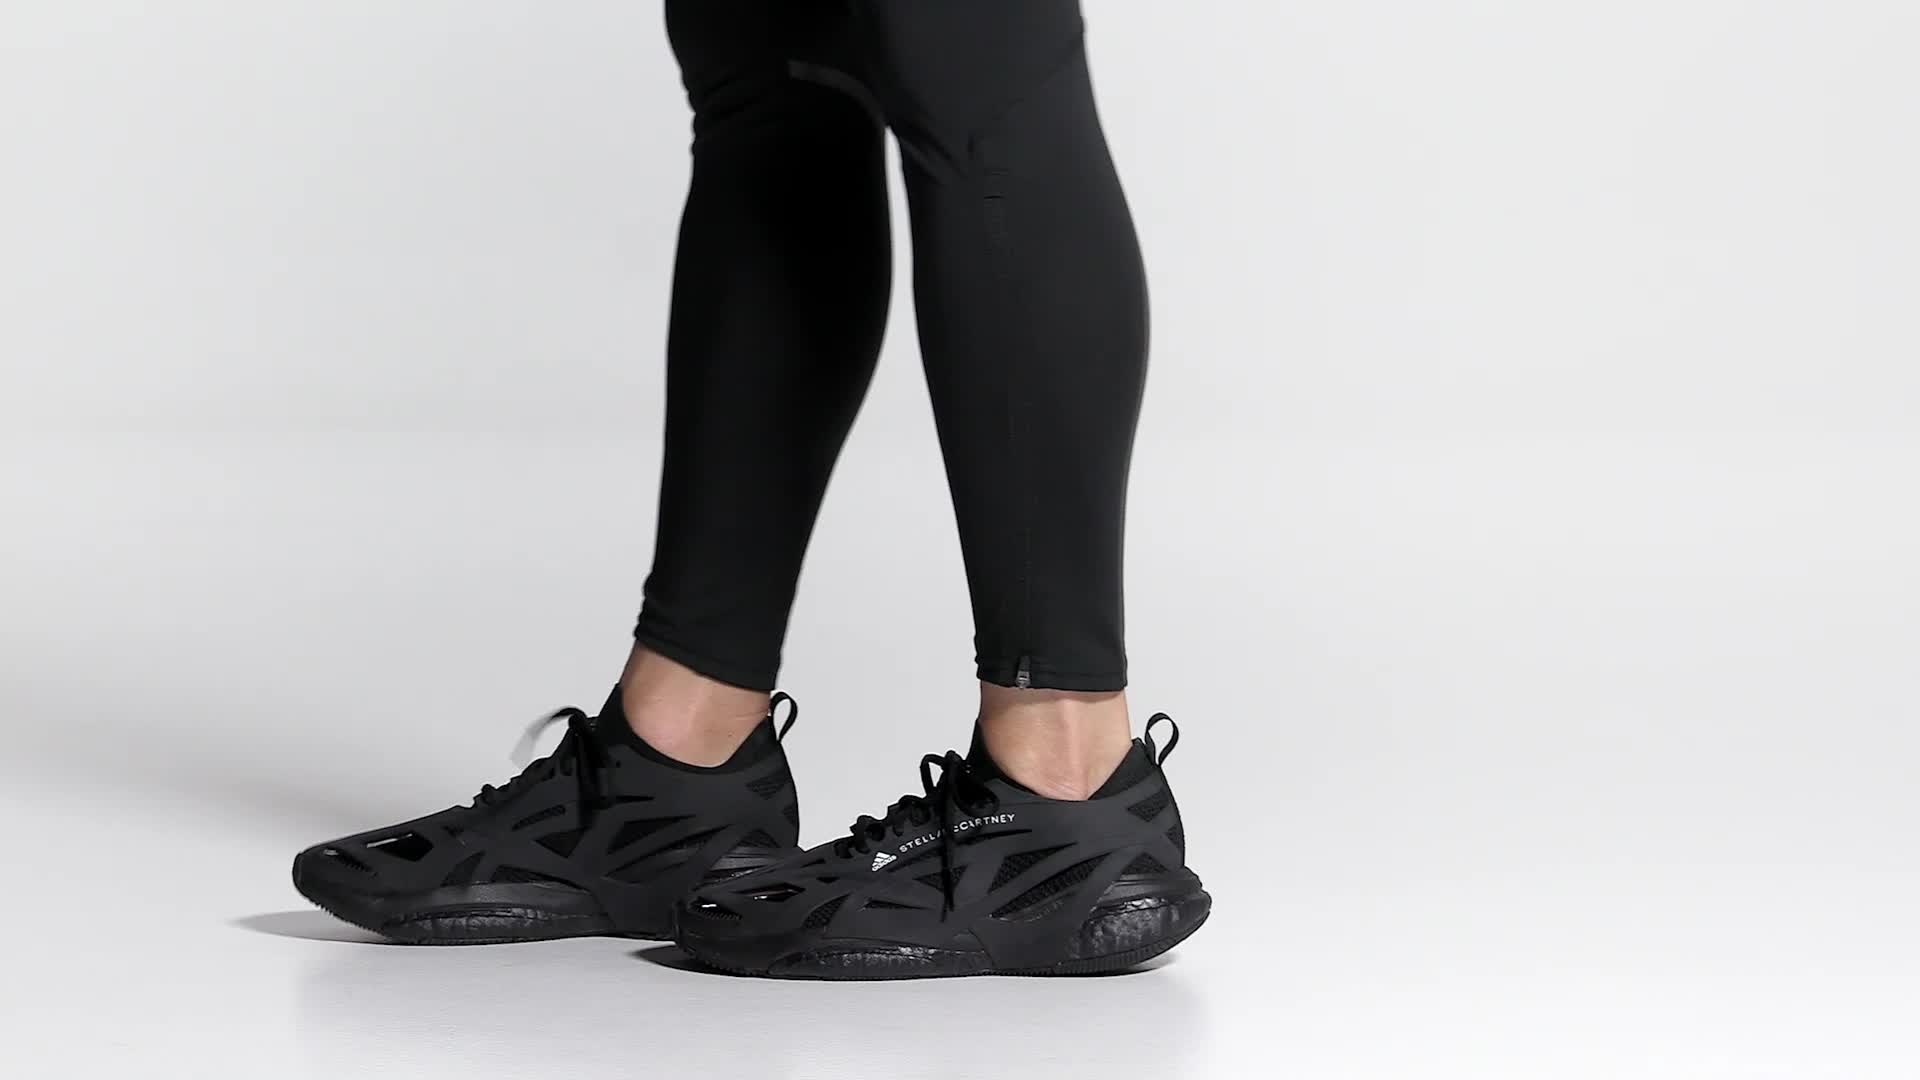 adidas by Stella McCartney Solarglide Shoes - Black, Women's Lifestyle, adidas US